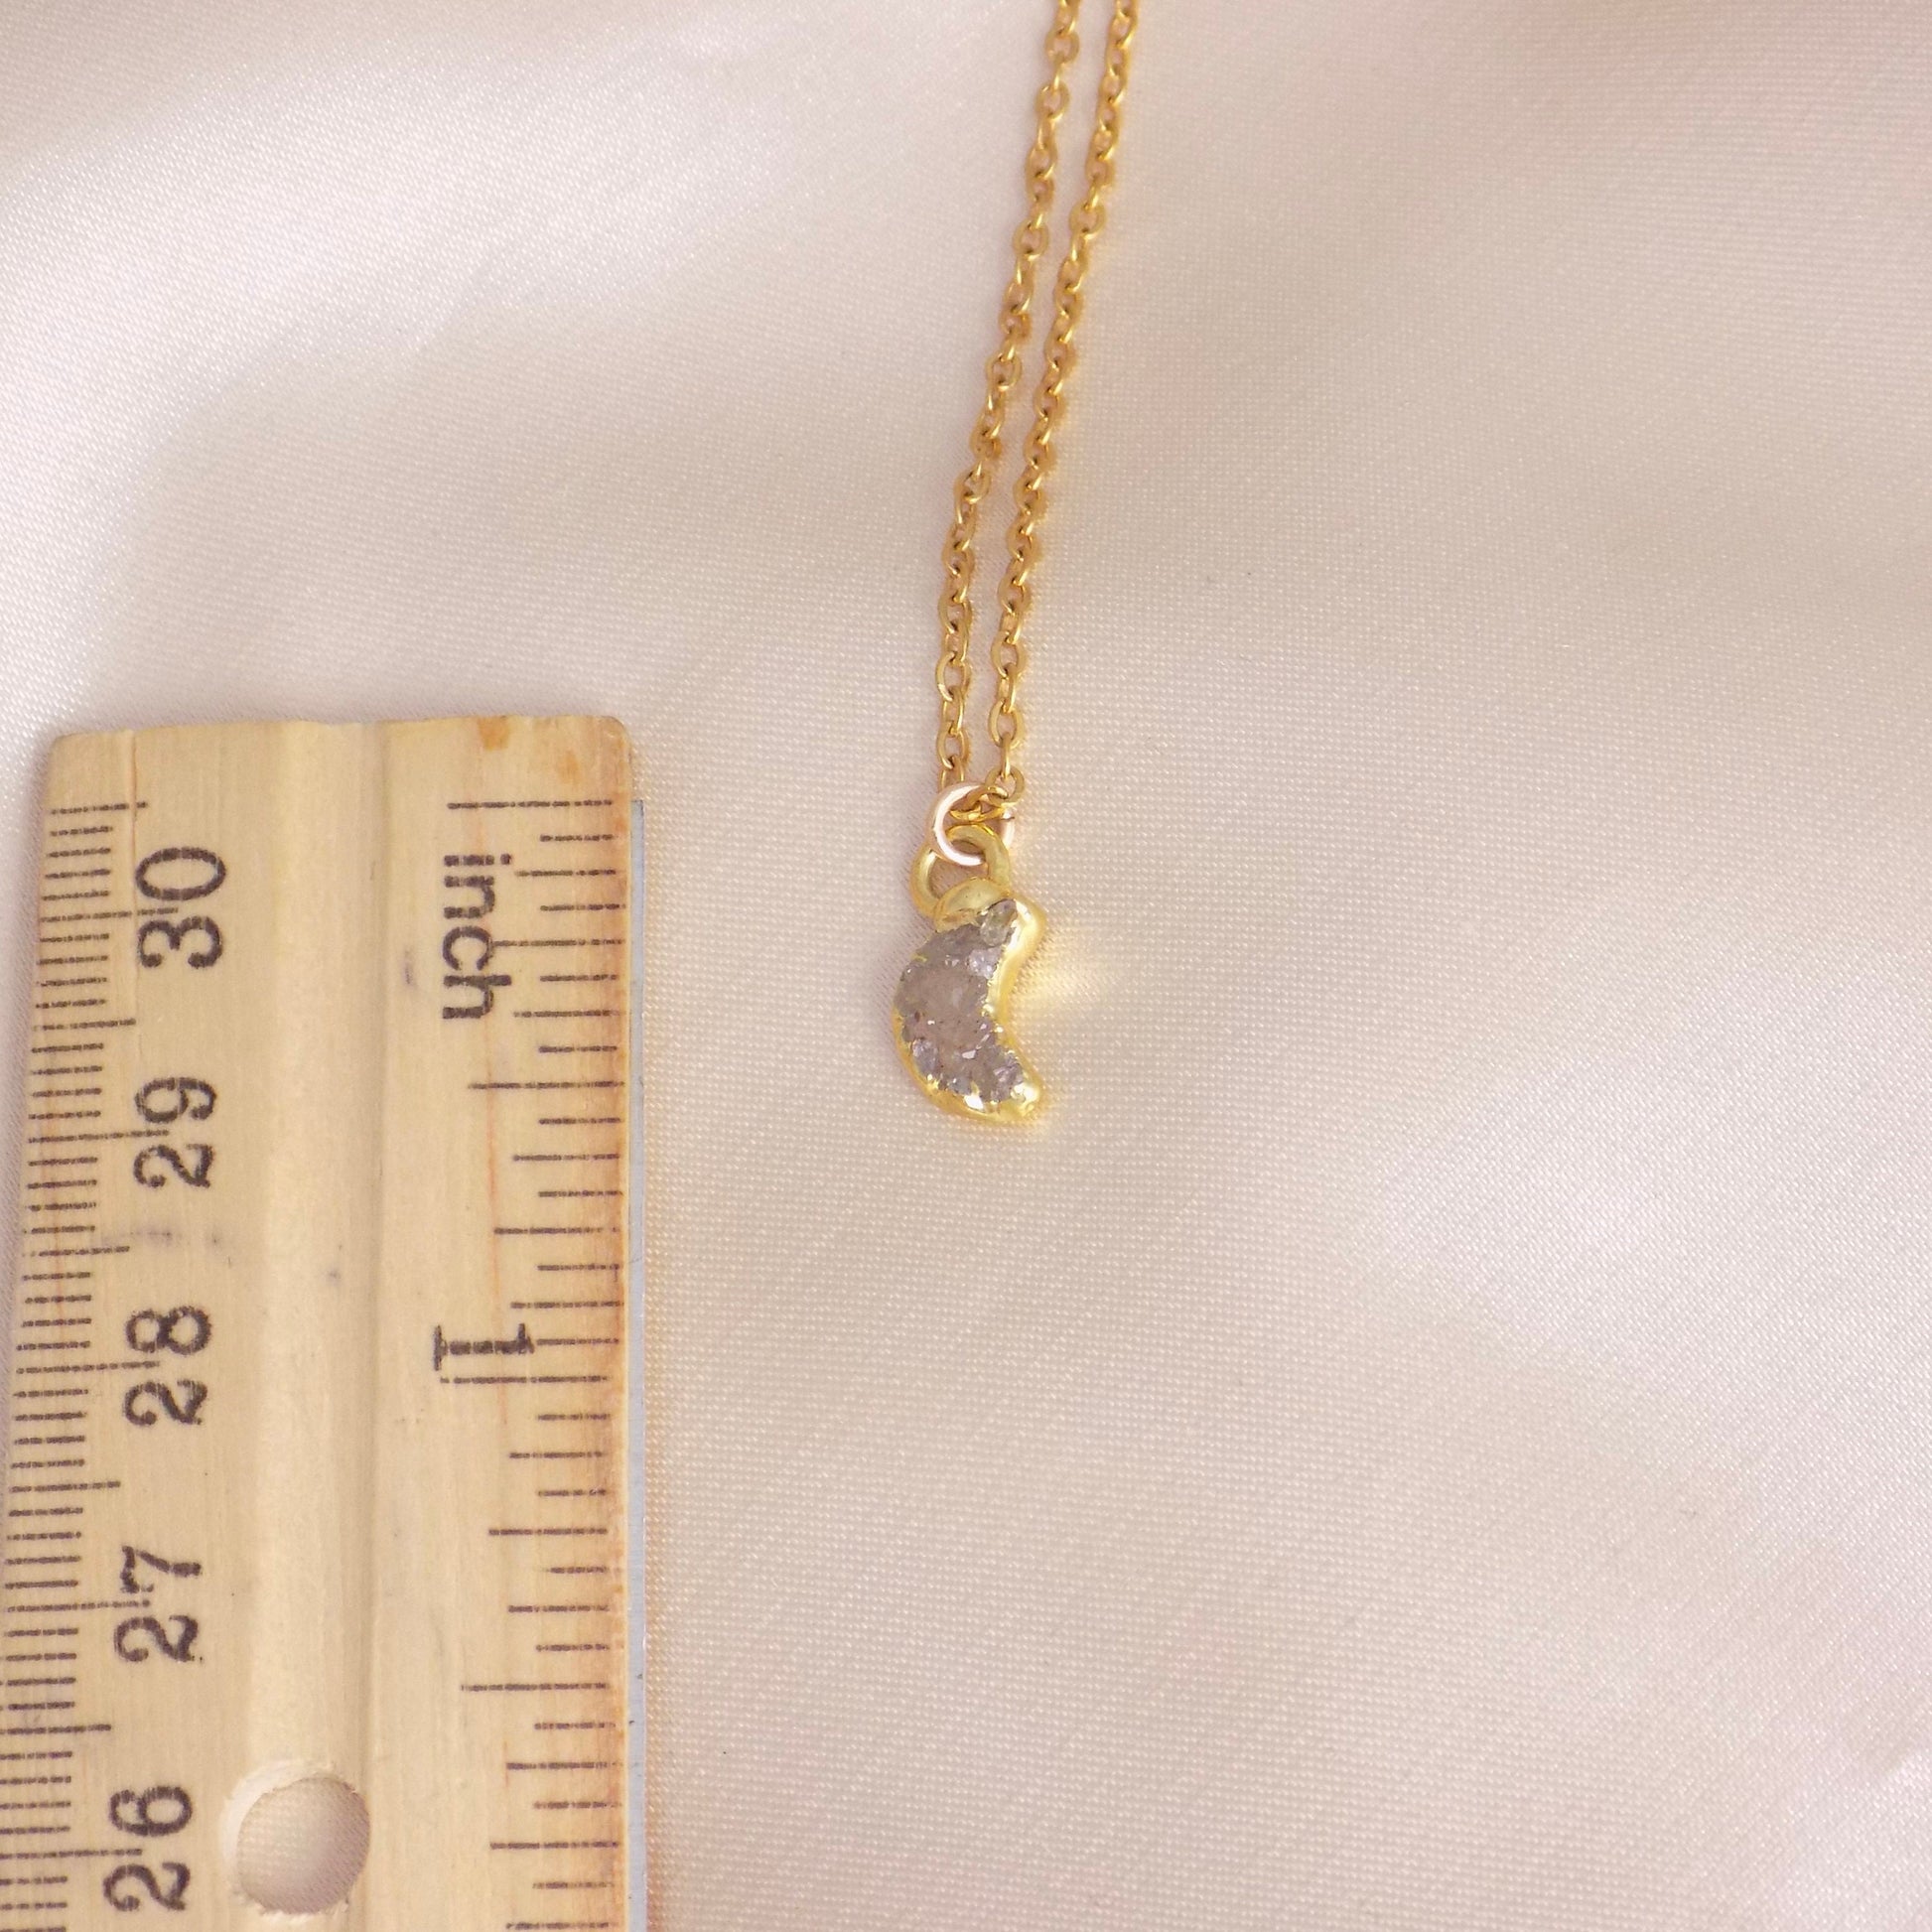 Tiny Moon Necklace Gold, Natural Druzy Gemstone, Minimalist Jewelry, R14-47